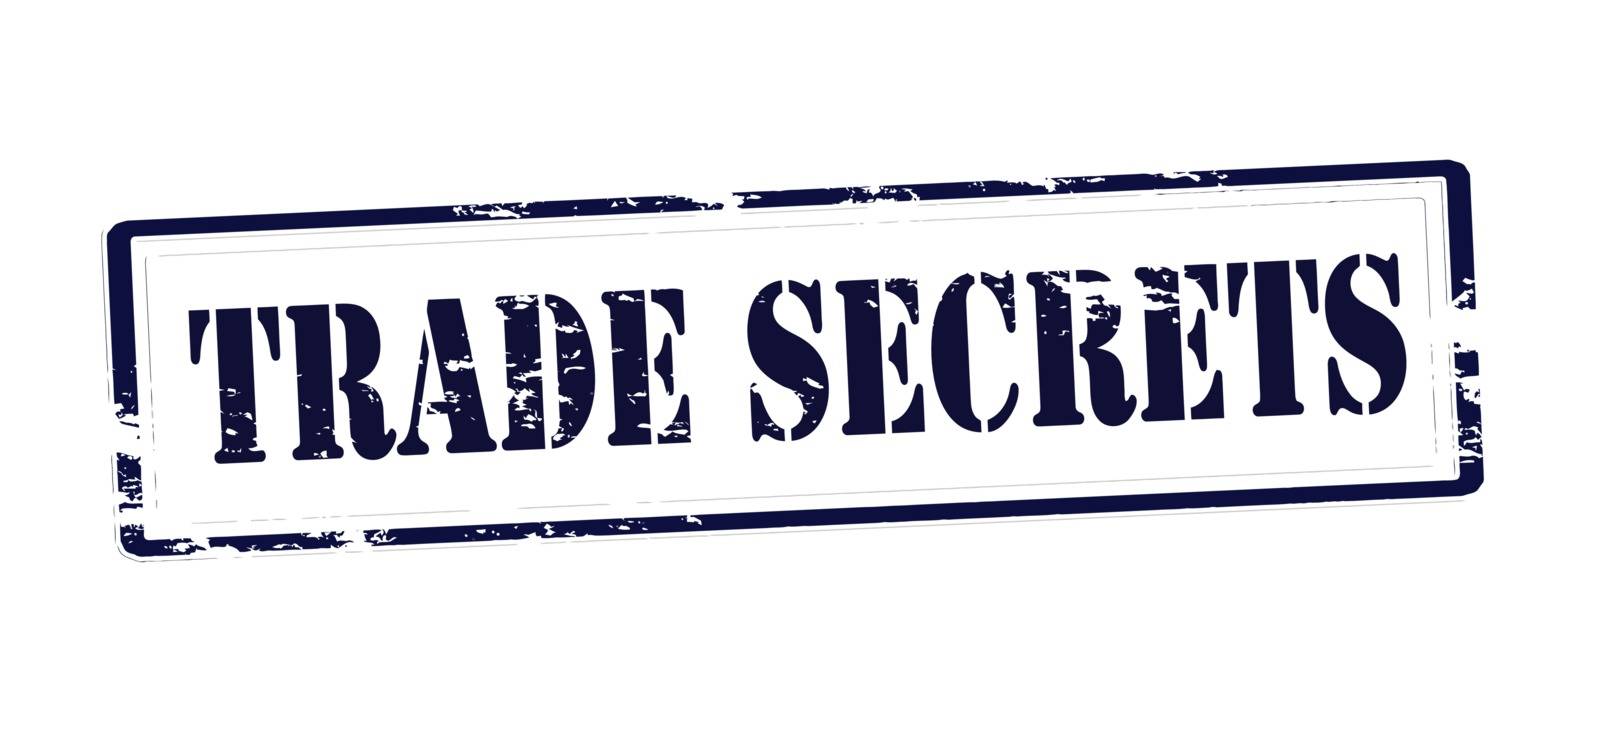 Trade secrets by carmenbobo